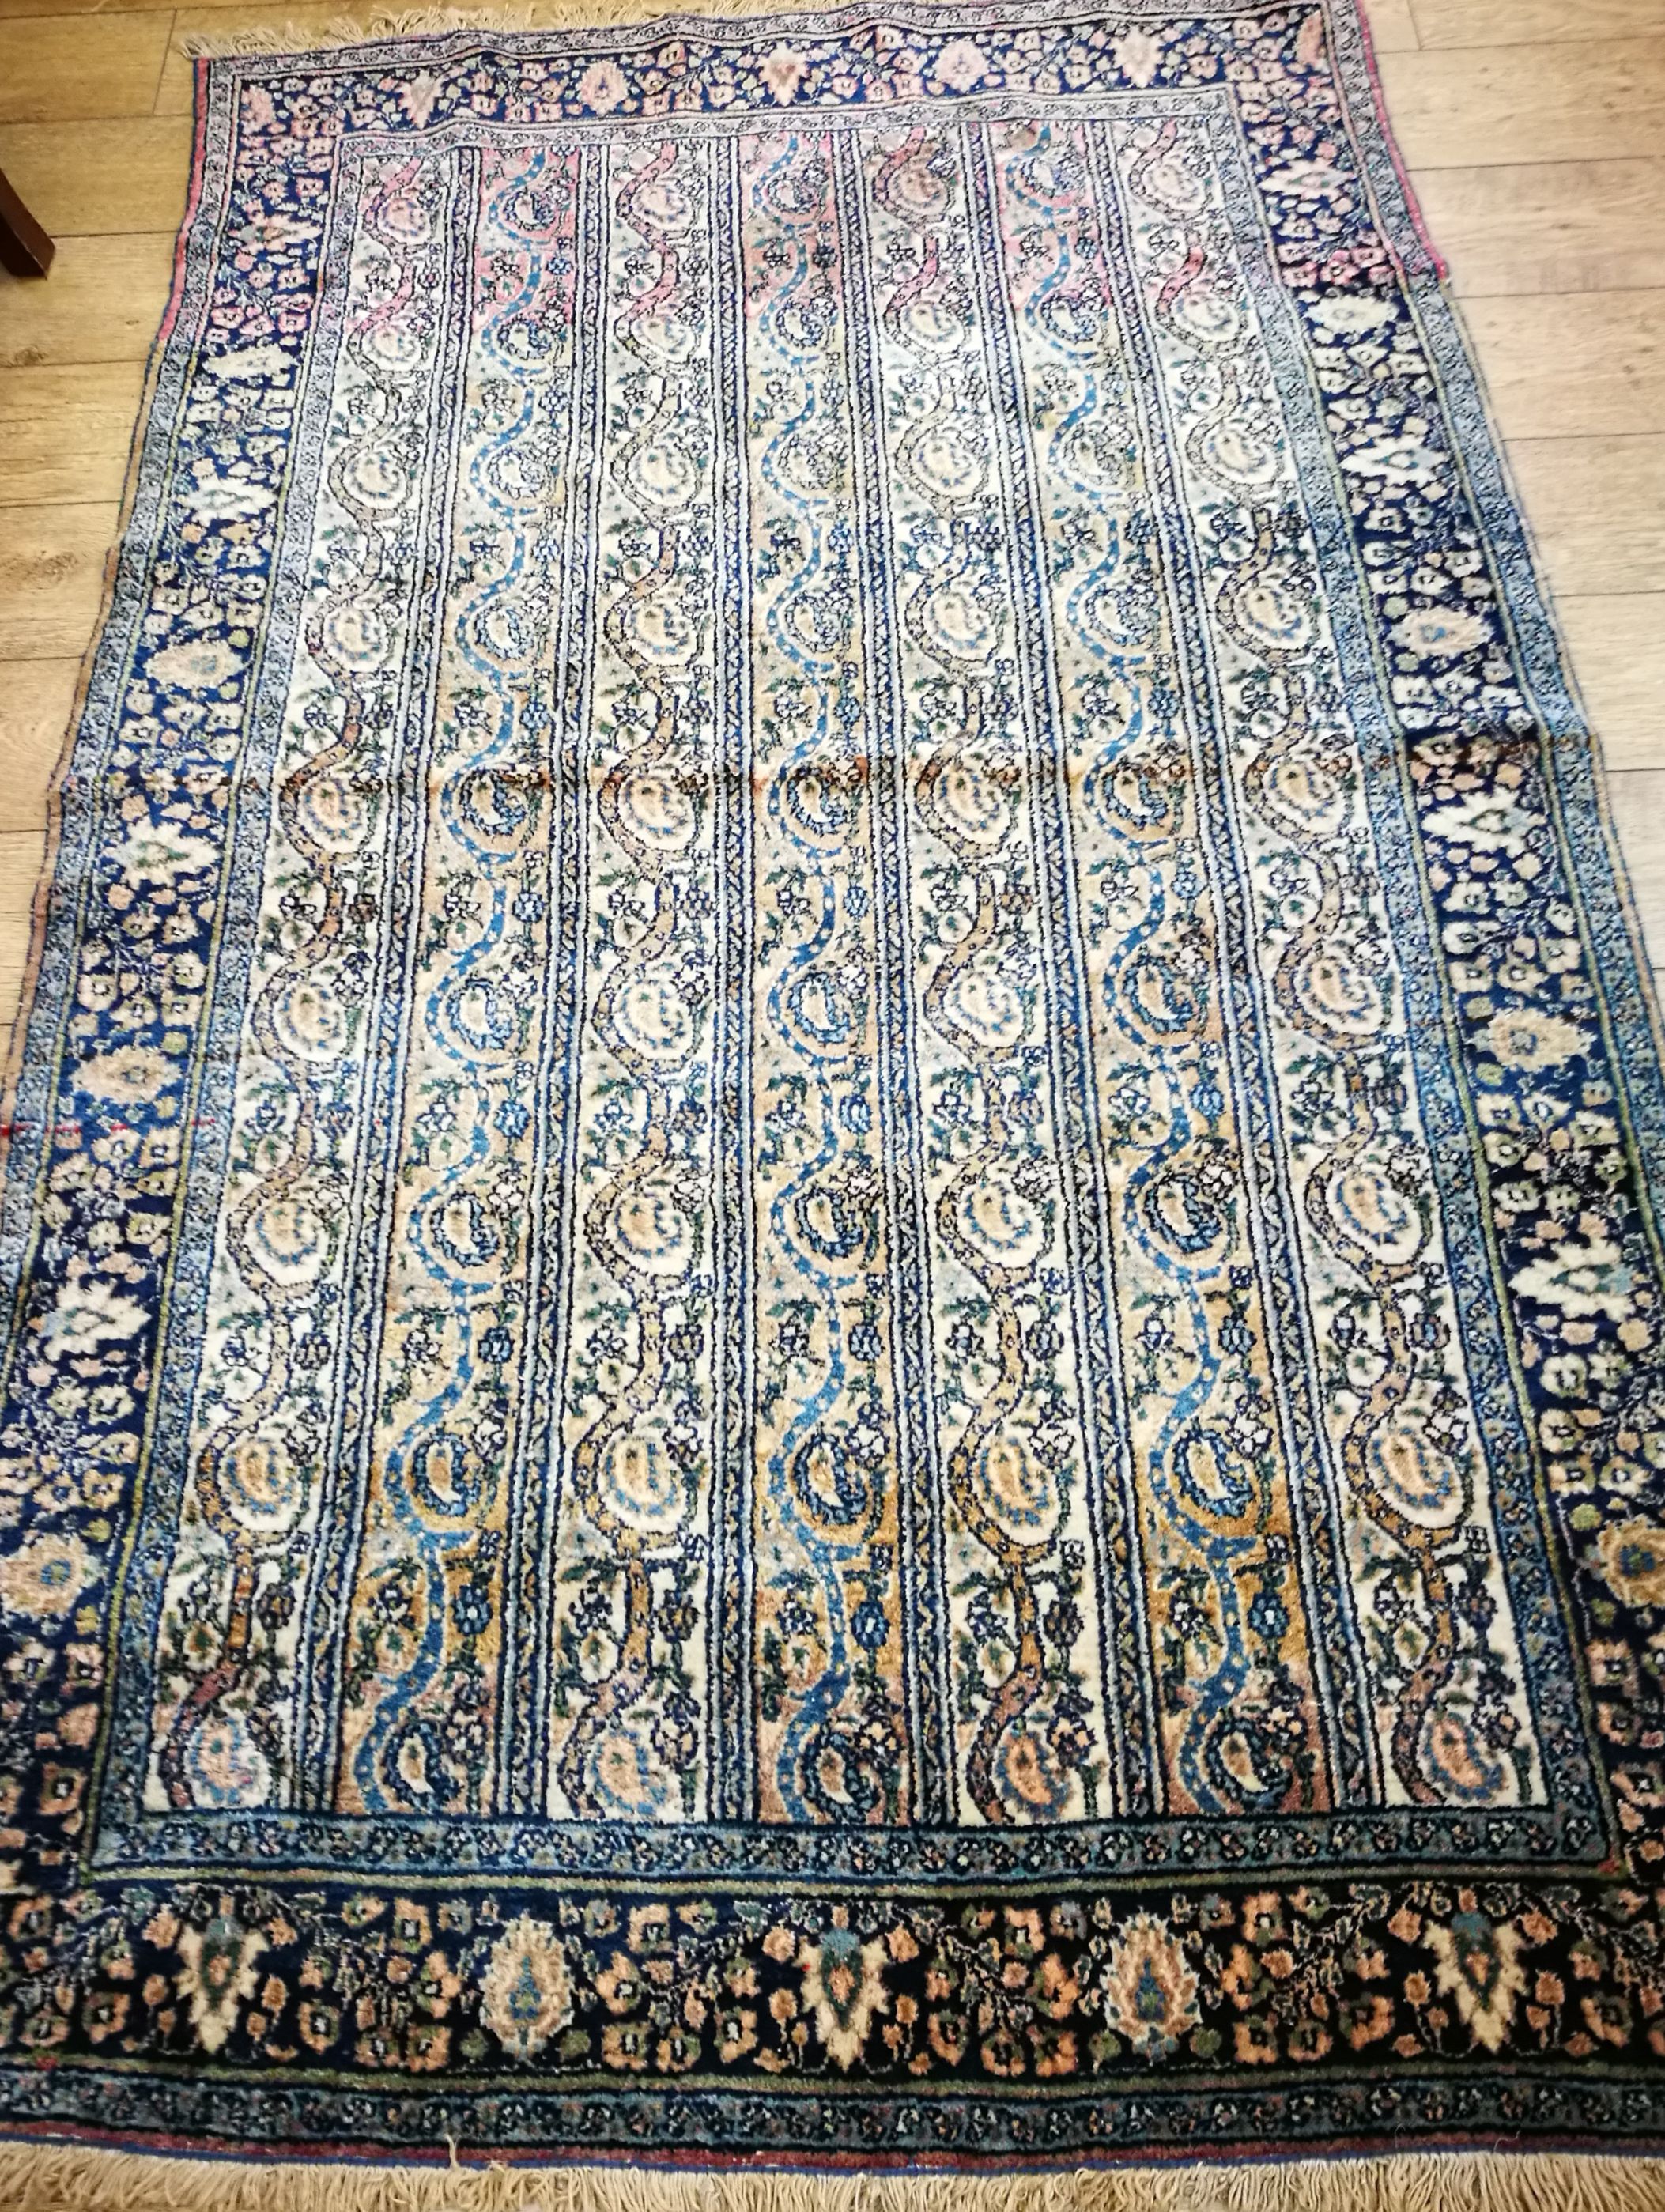 A North West Persian rug 208 x 130cm